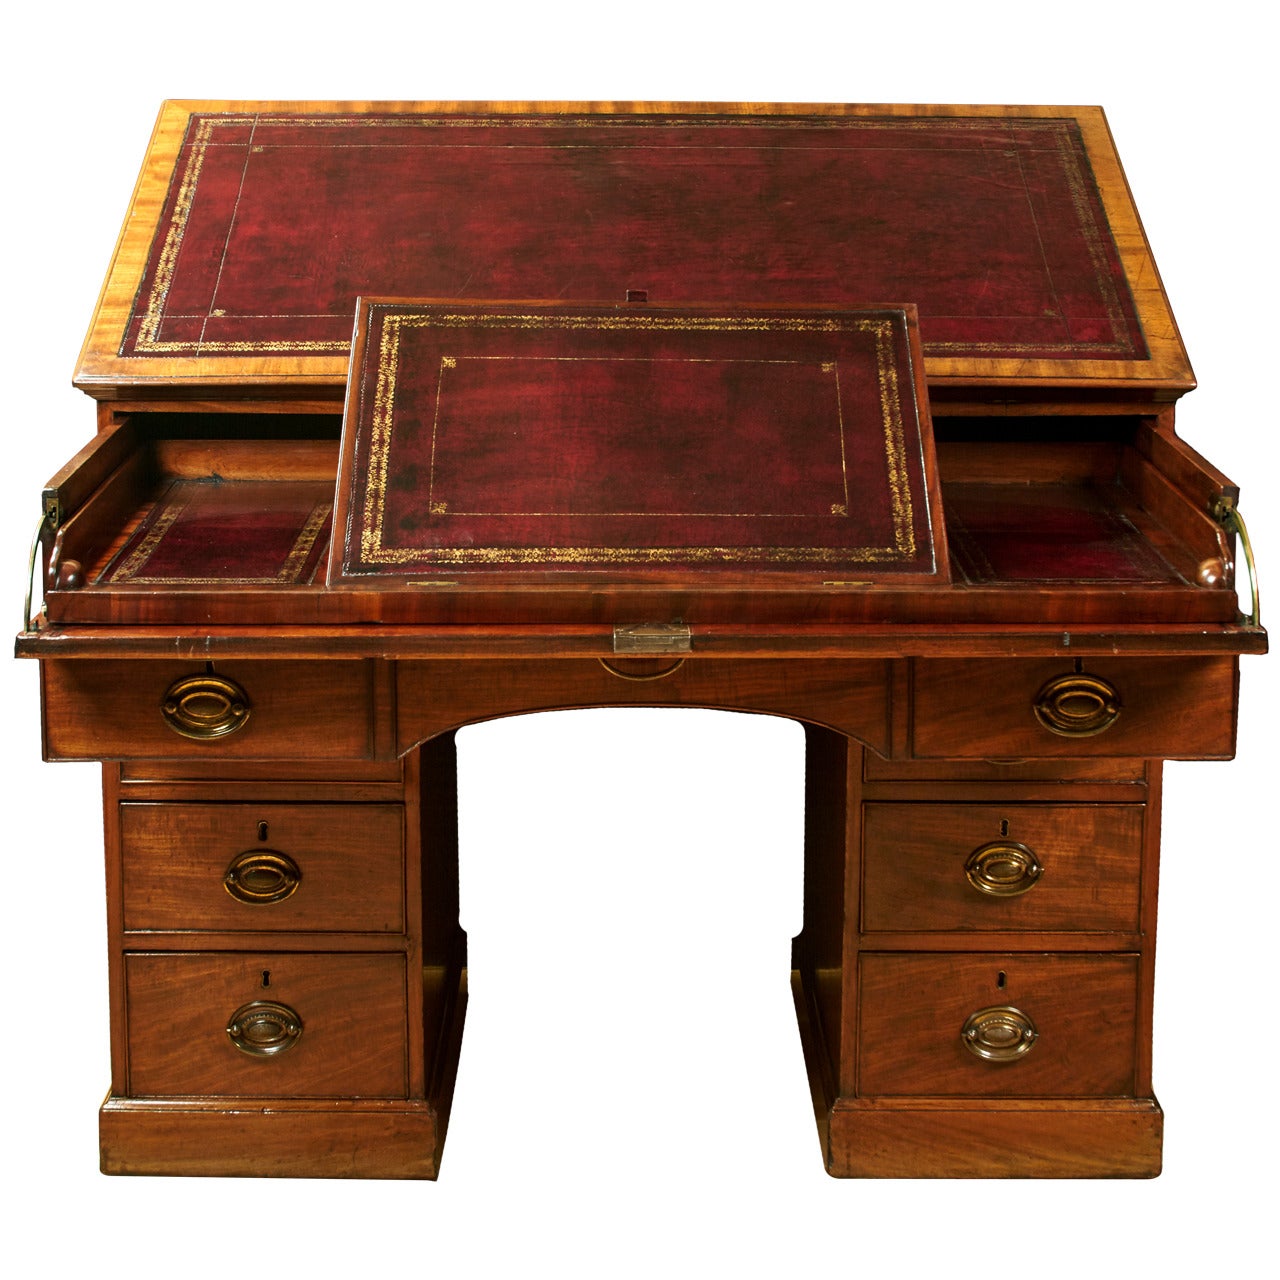 Regency Mahogany Architect's Desk Attributed to Gillows